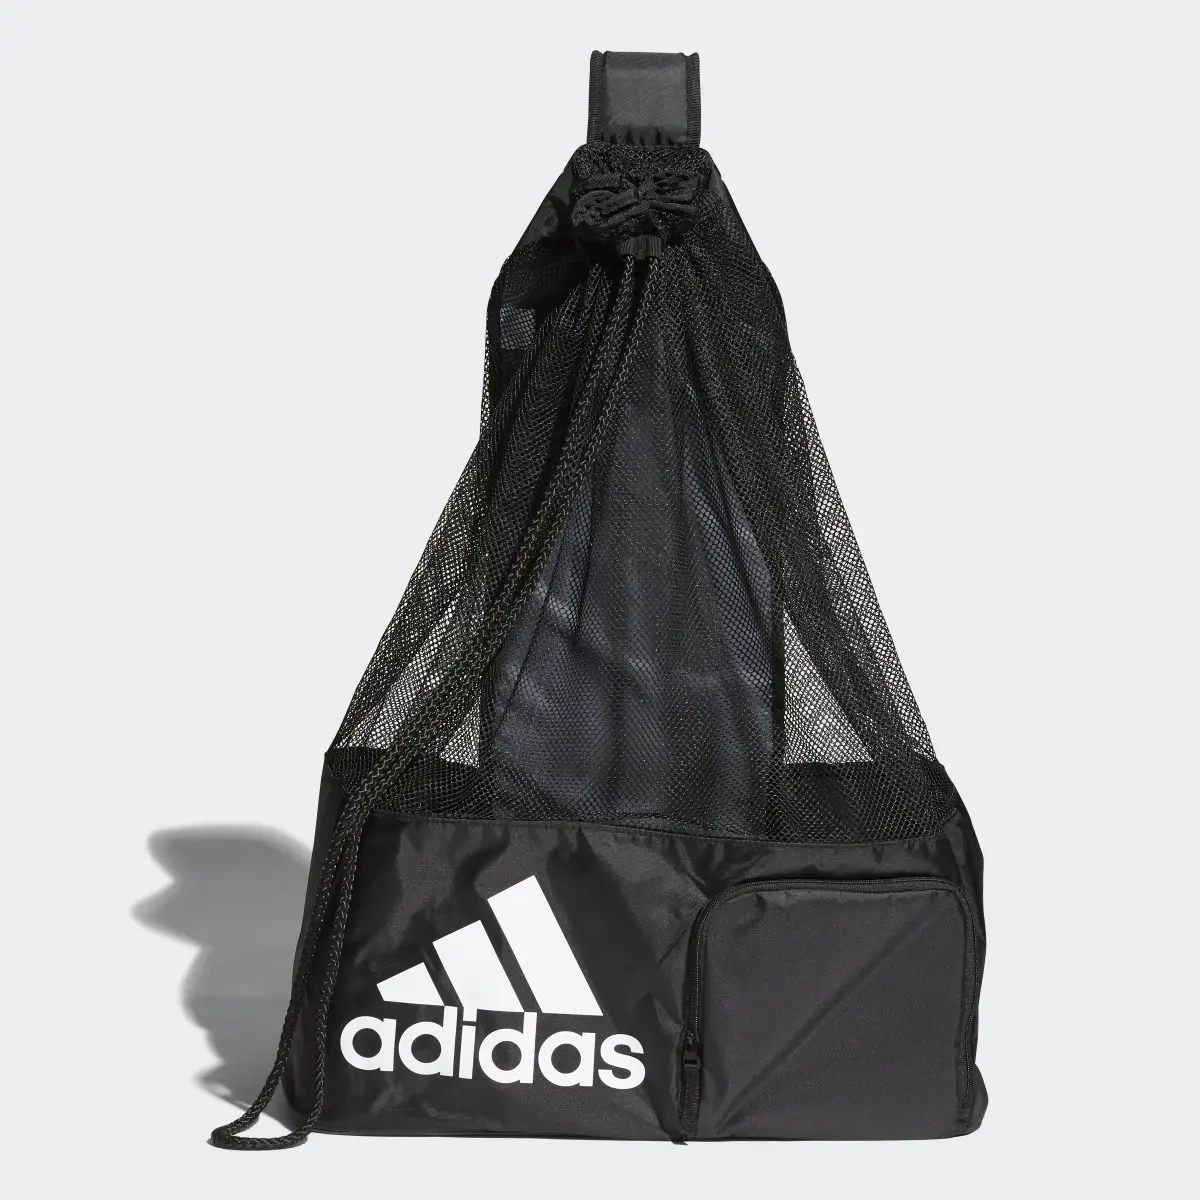 Adidas Stadium Ball Bag. 2